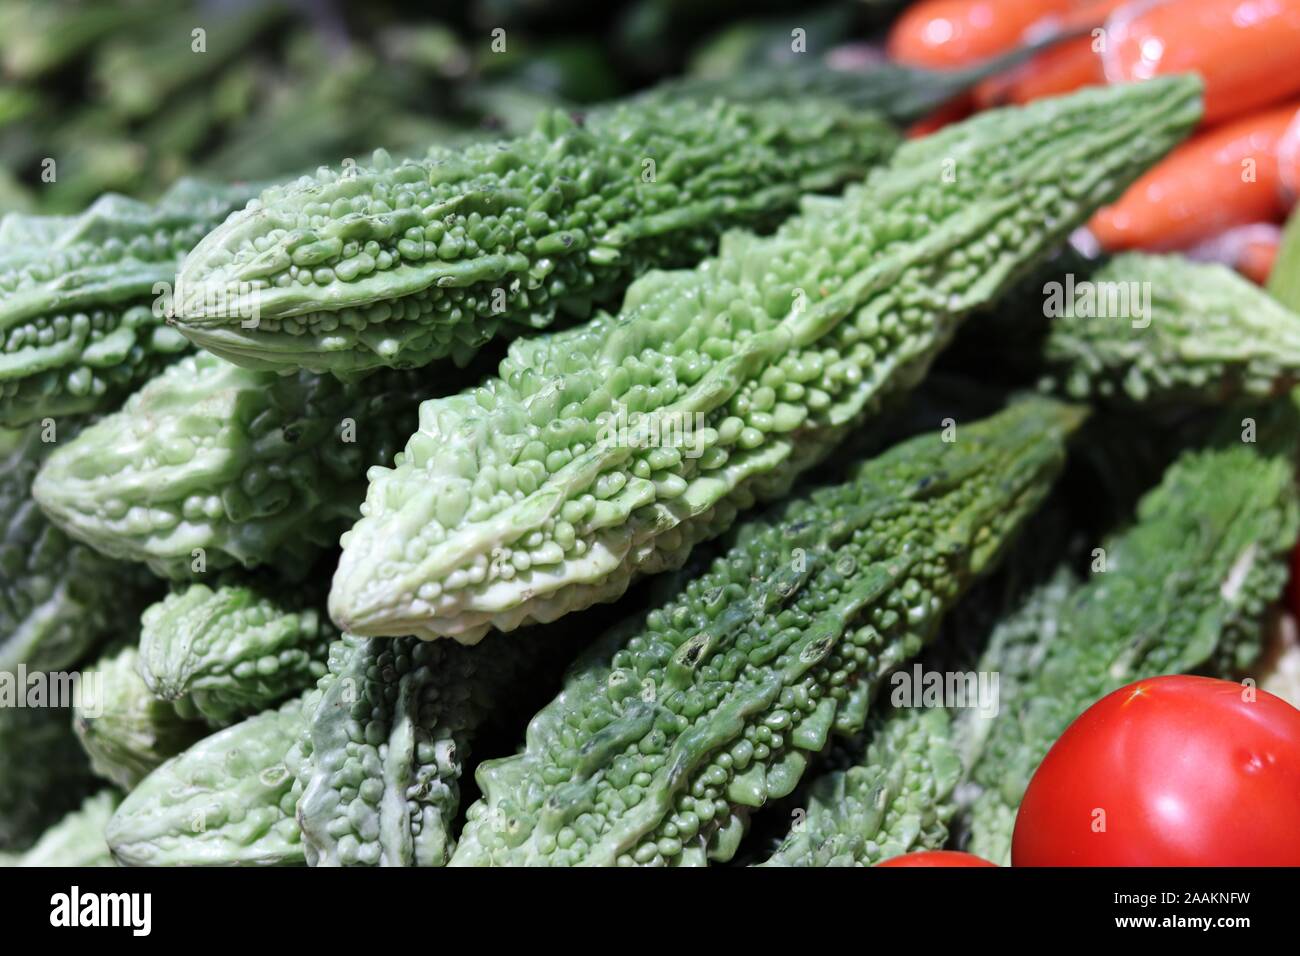 Indian cucumbers (kankri or khira) on display in market Stock Photo